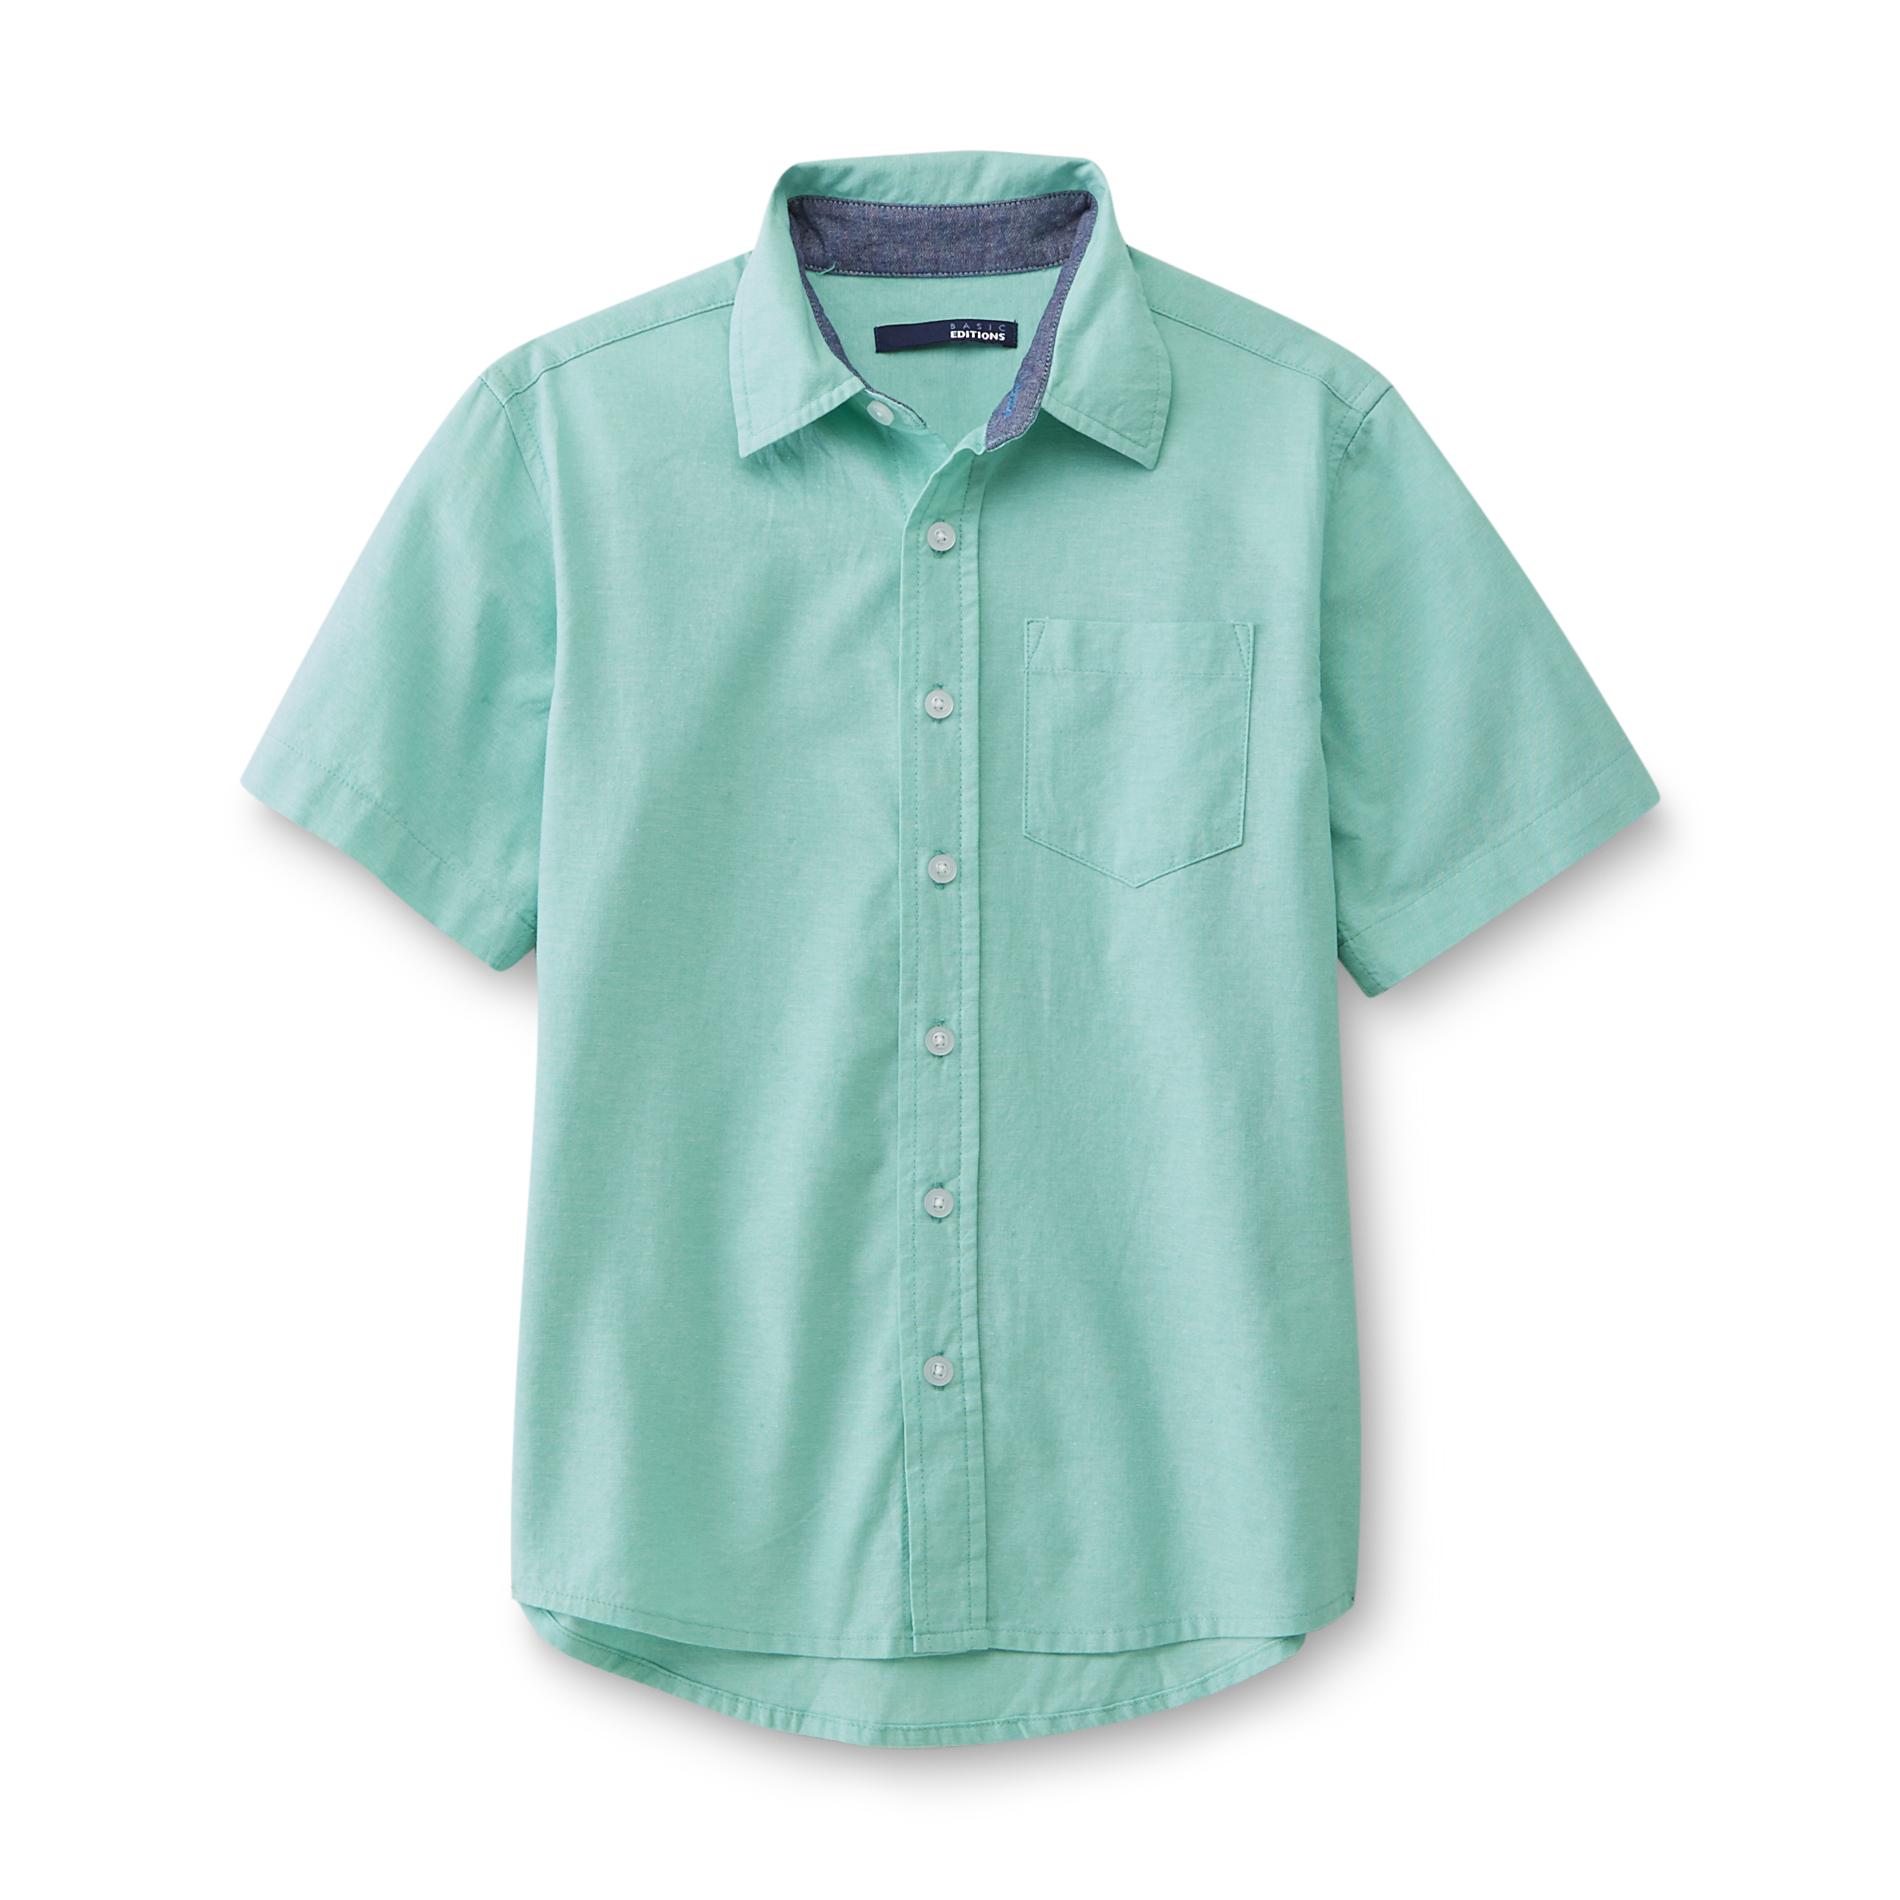 Basic Editions Boy's Woven Oxford Shirt